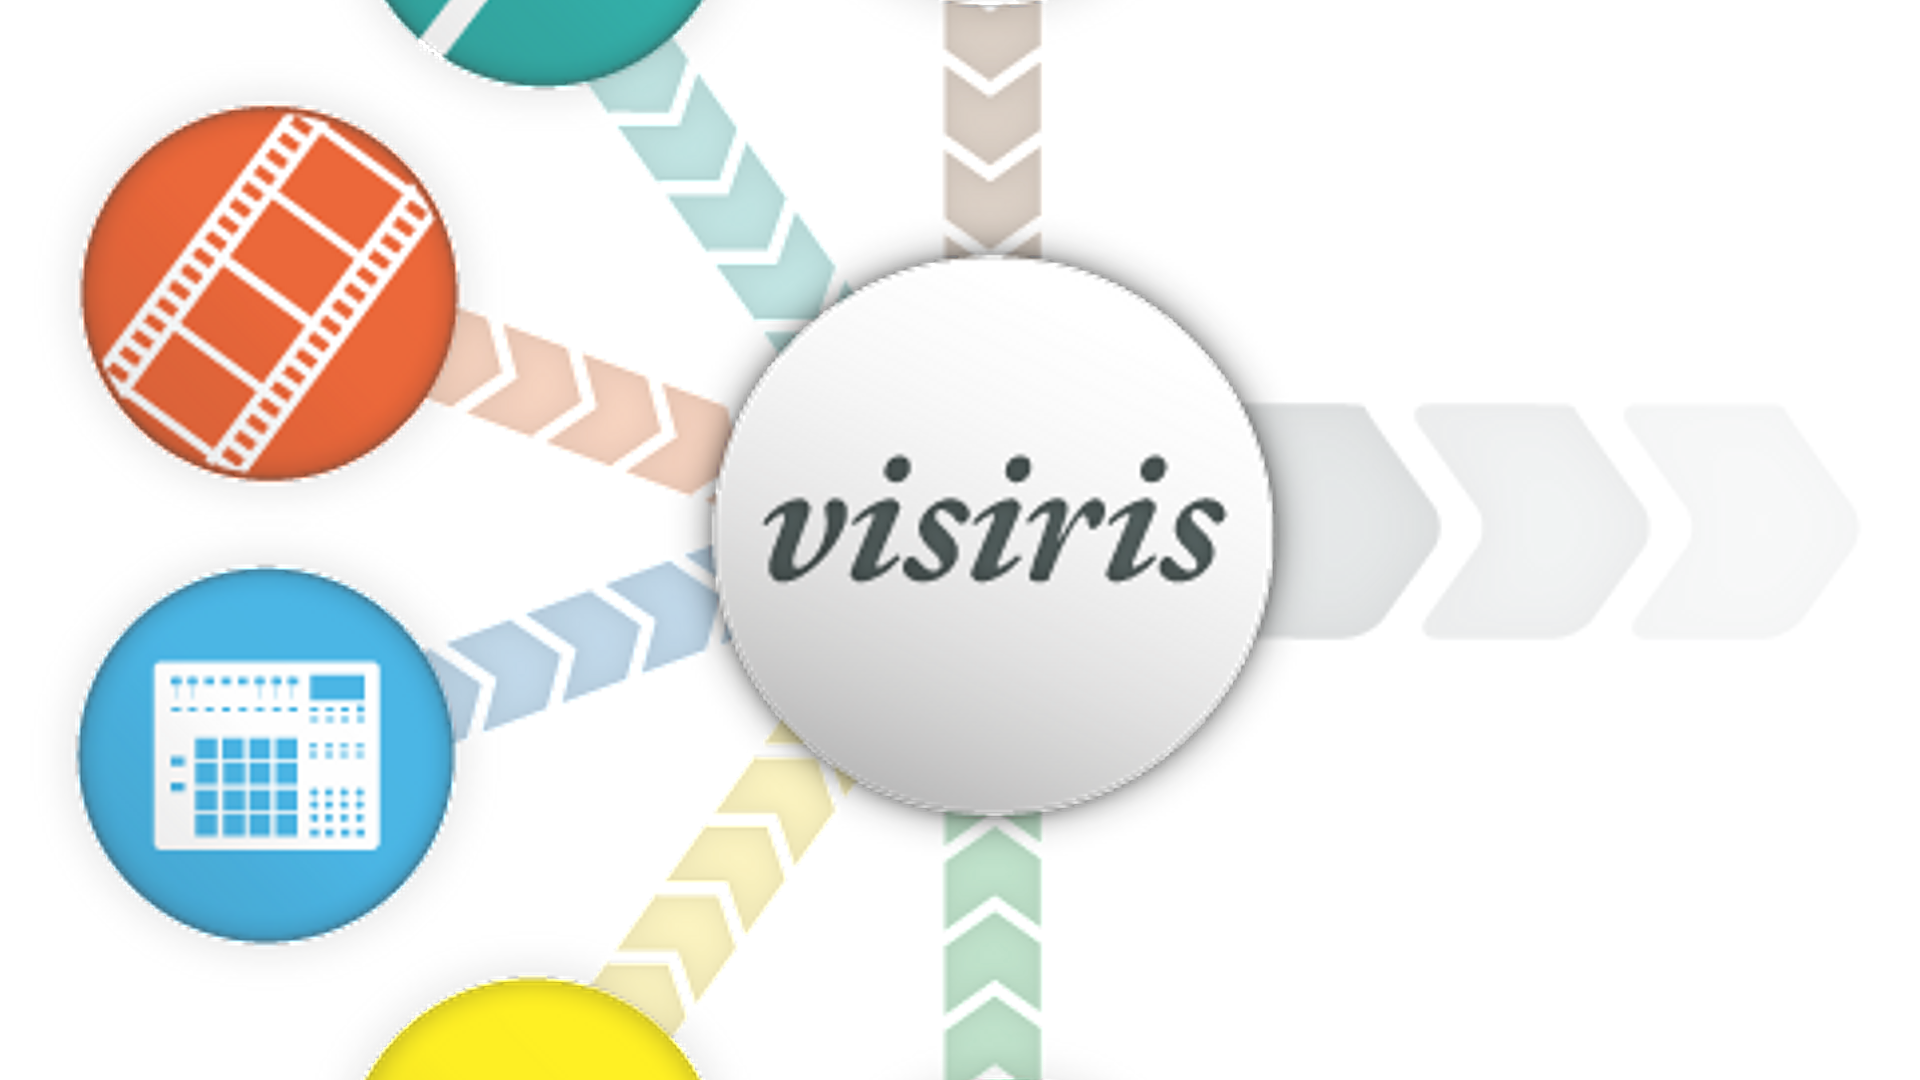 Project Visiris